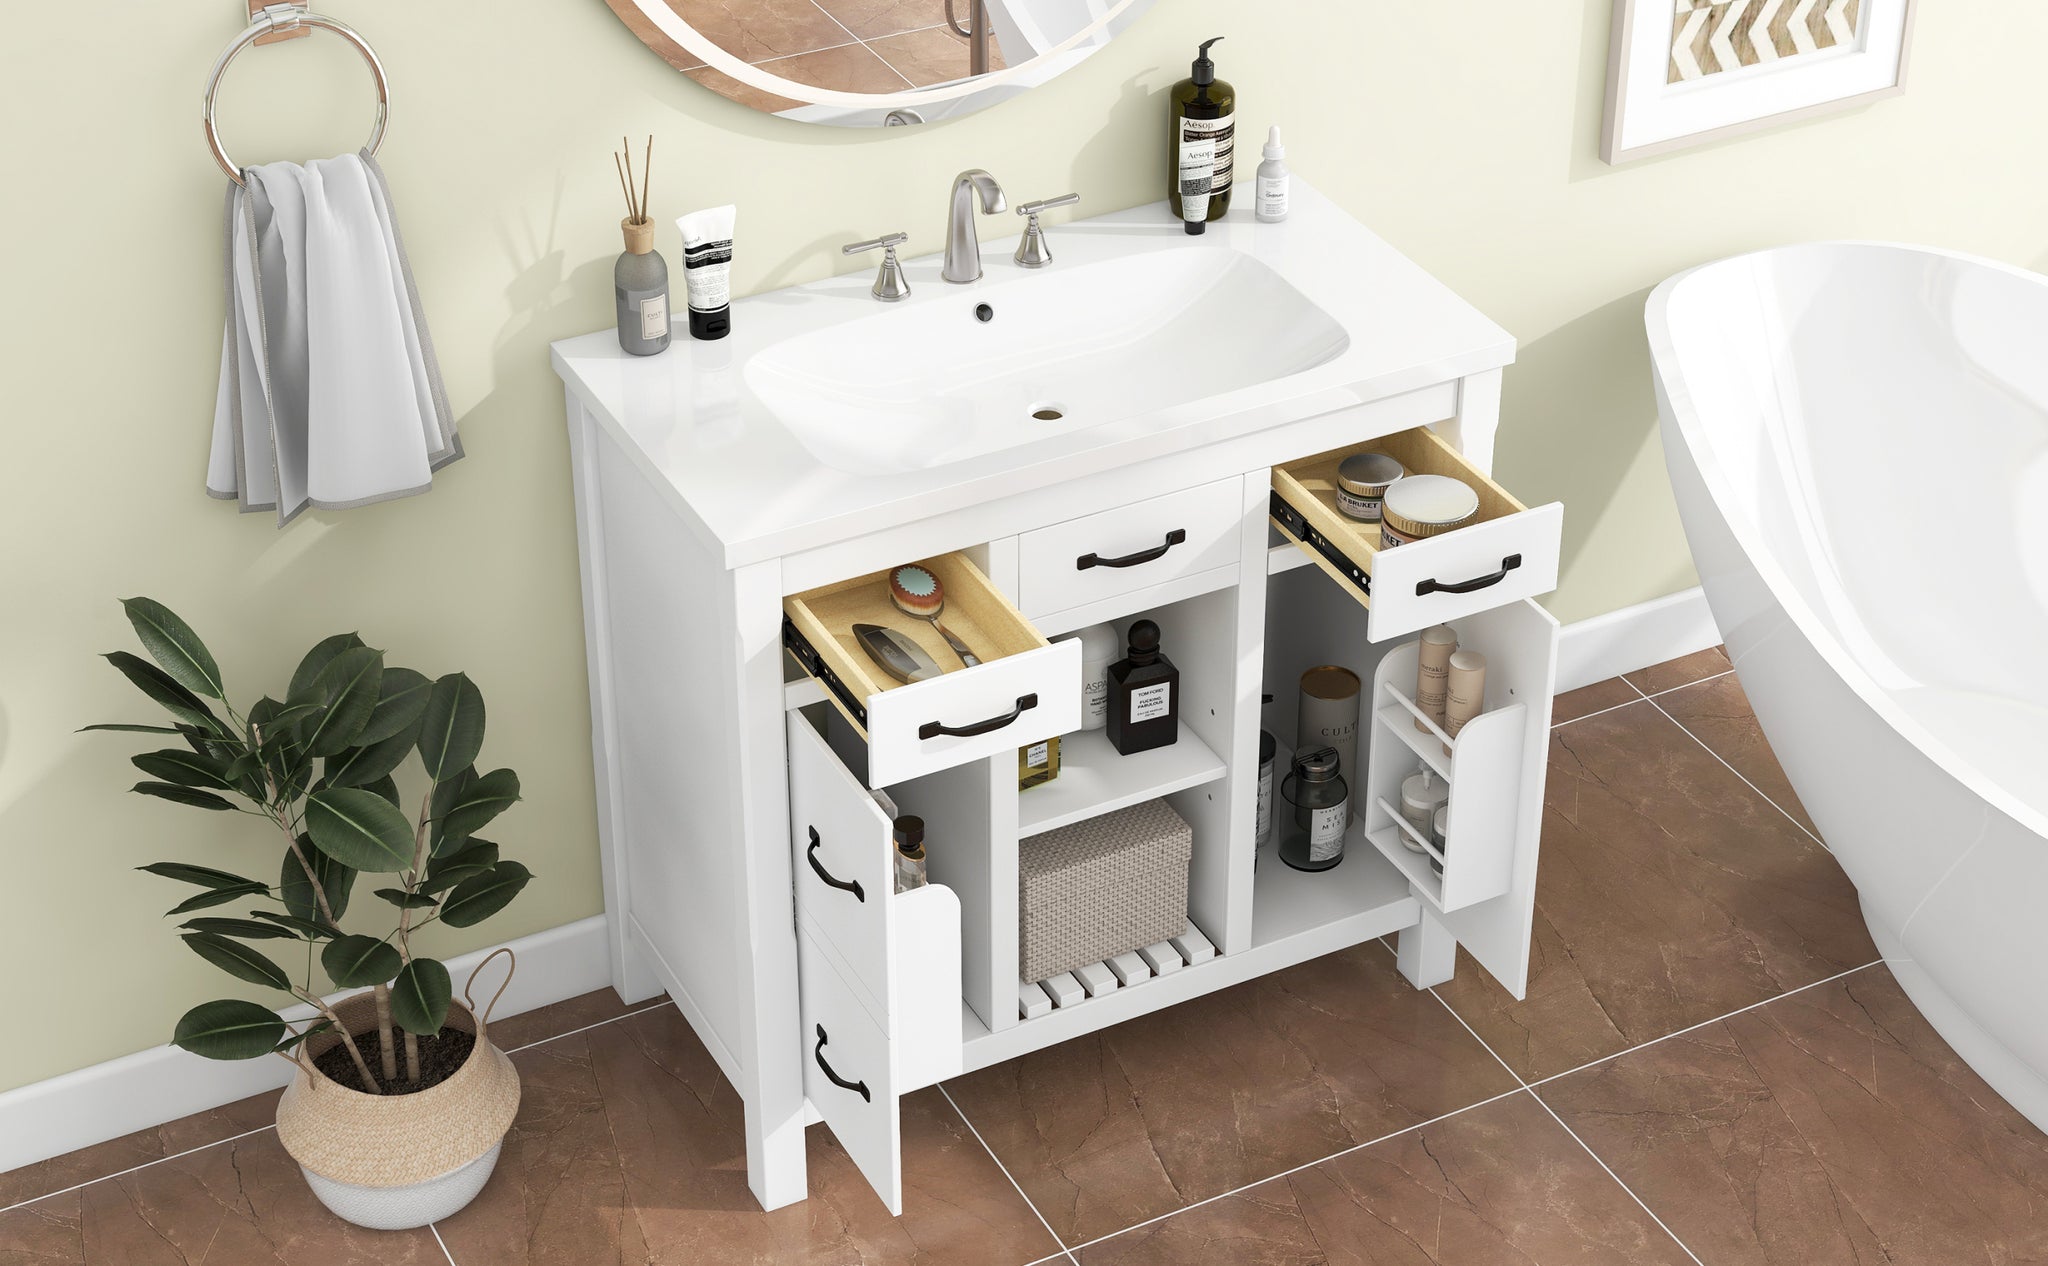 36''Bathroom Vanity with Undermount Sink,Modern 2-white-2-2-adjustable